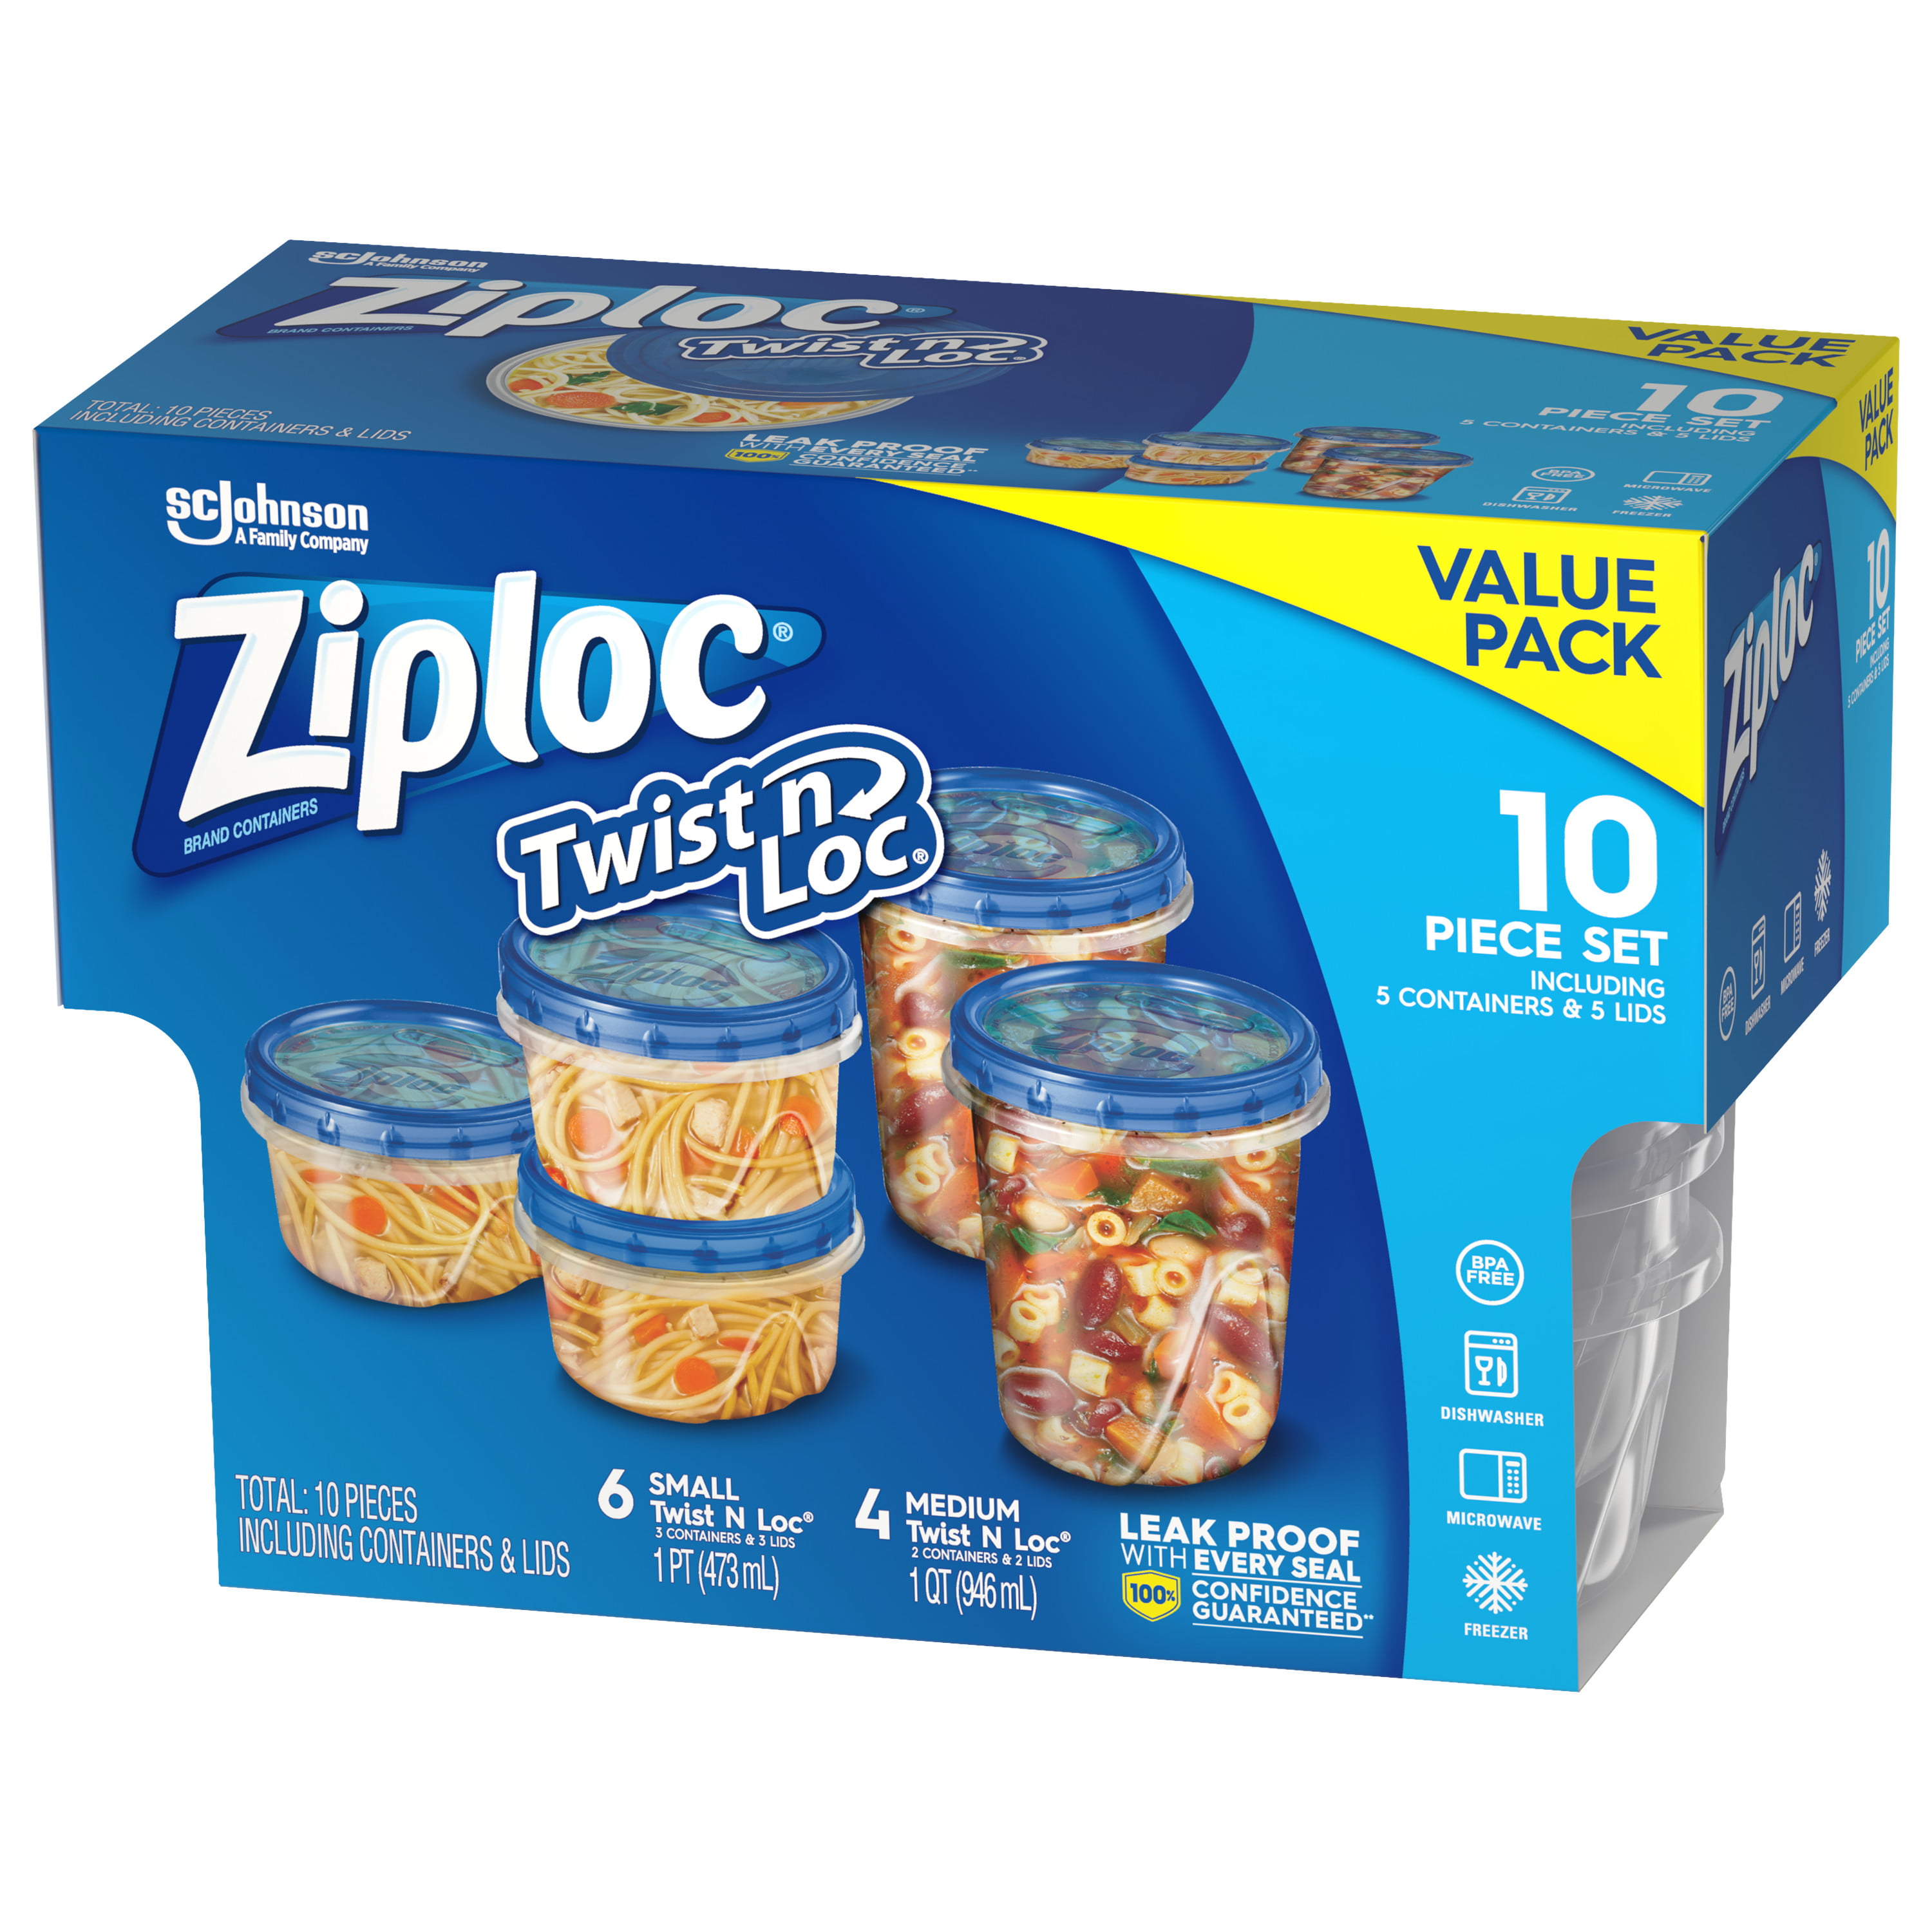 Ziploc 32 oz. Medium Twist 'n Loc Food Containers with Lids 2pk old style  NIB